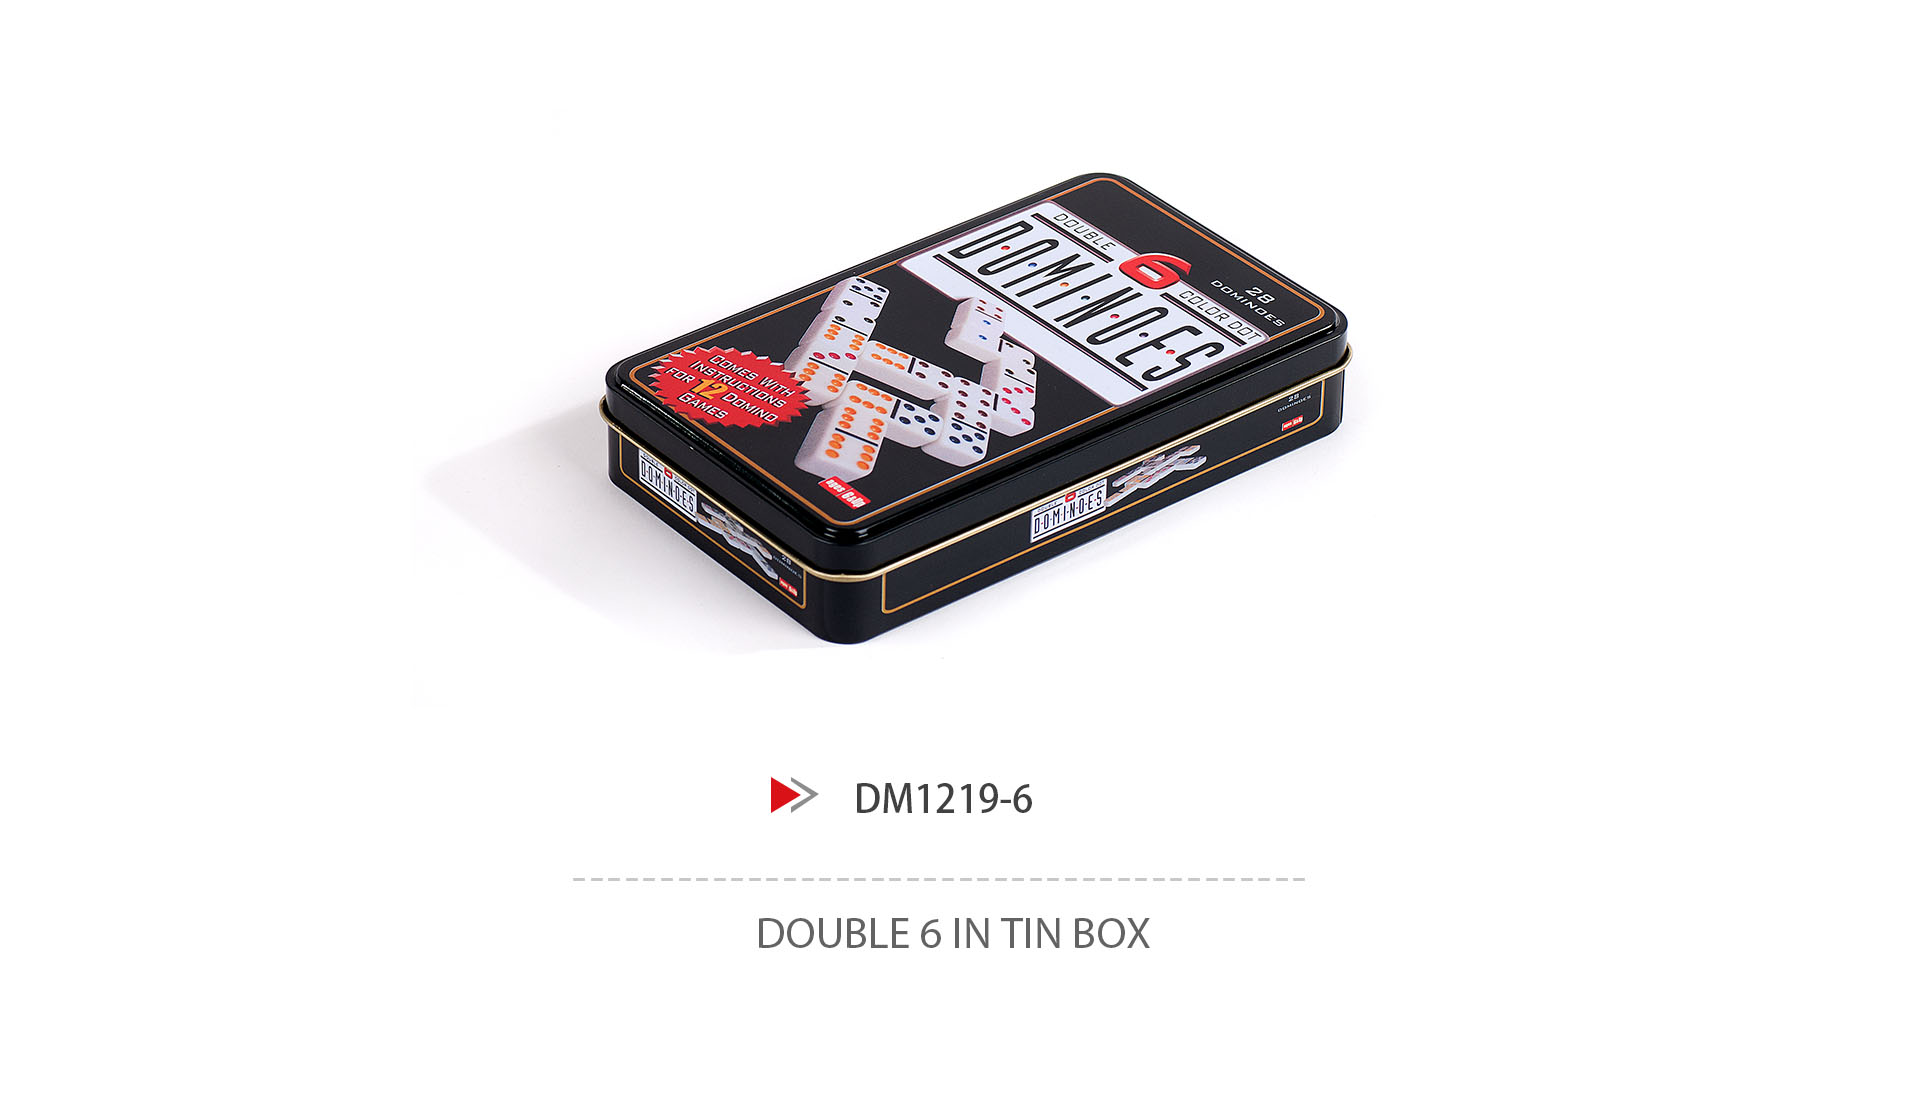 DM1219-6 DOUBLE 6 IN TIN BOX